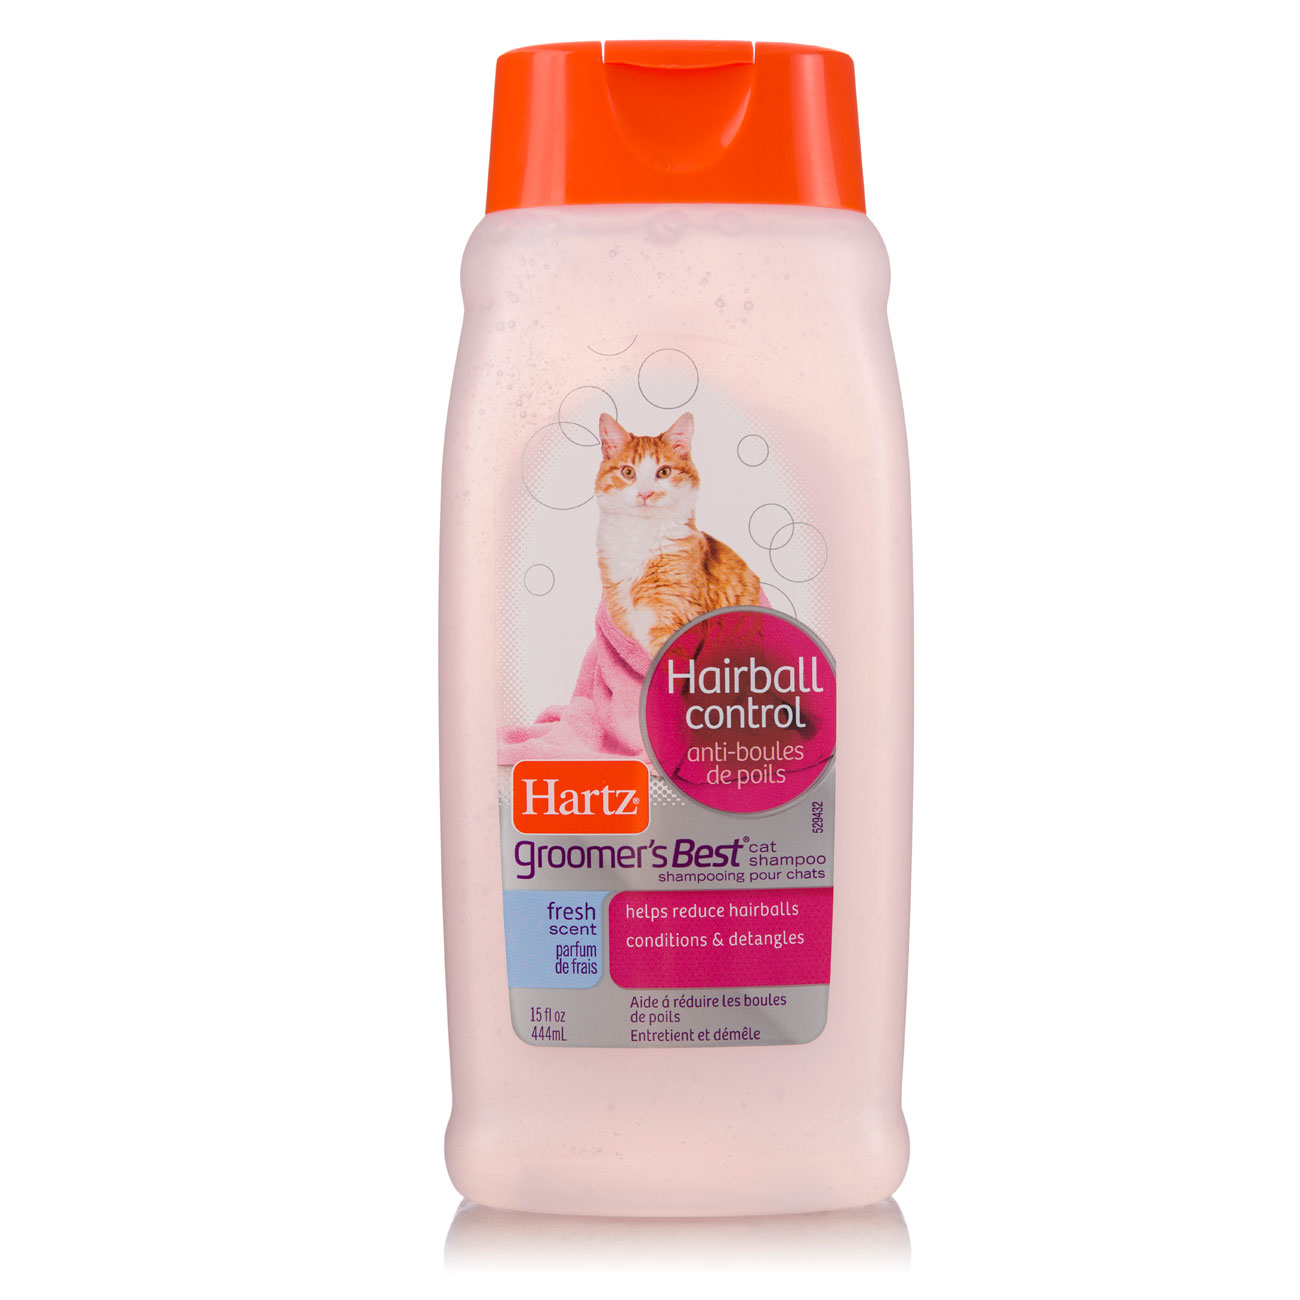 hartz groomer's best cat shampoo